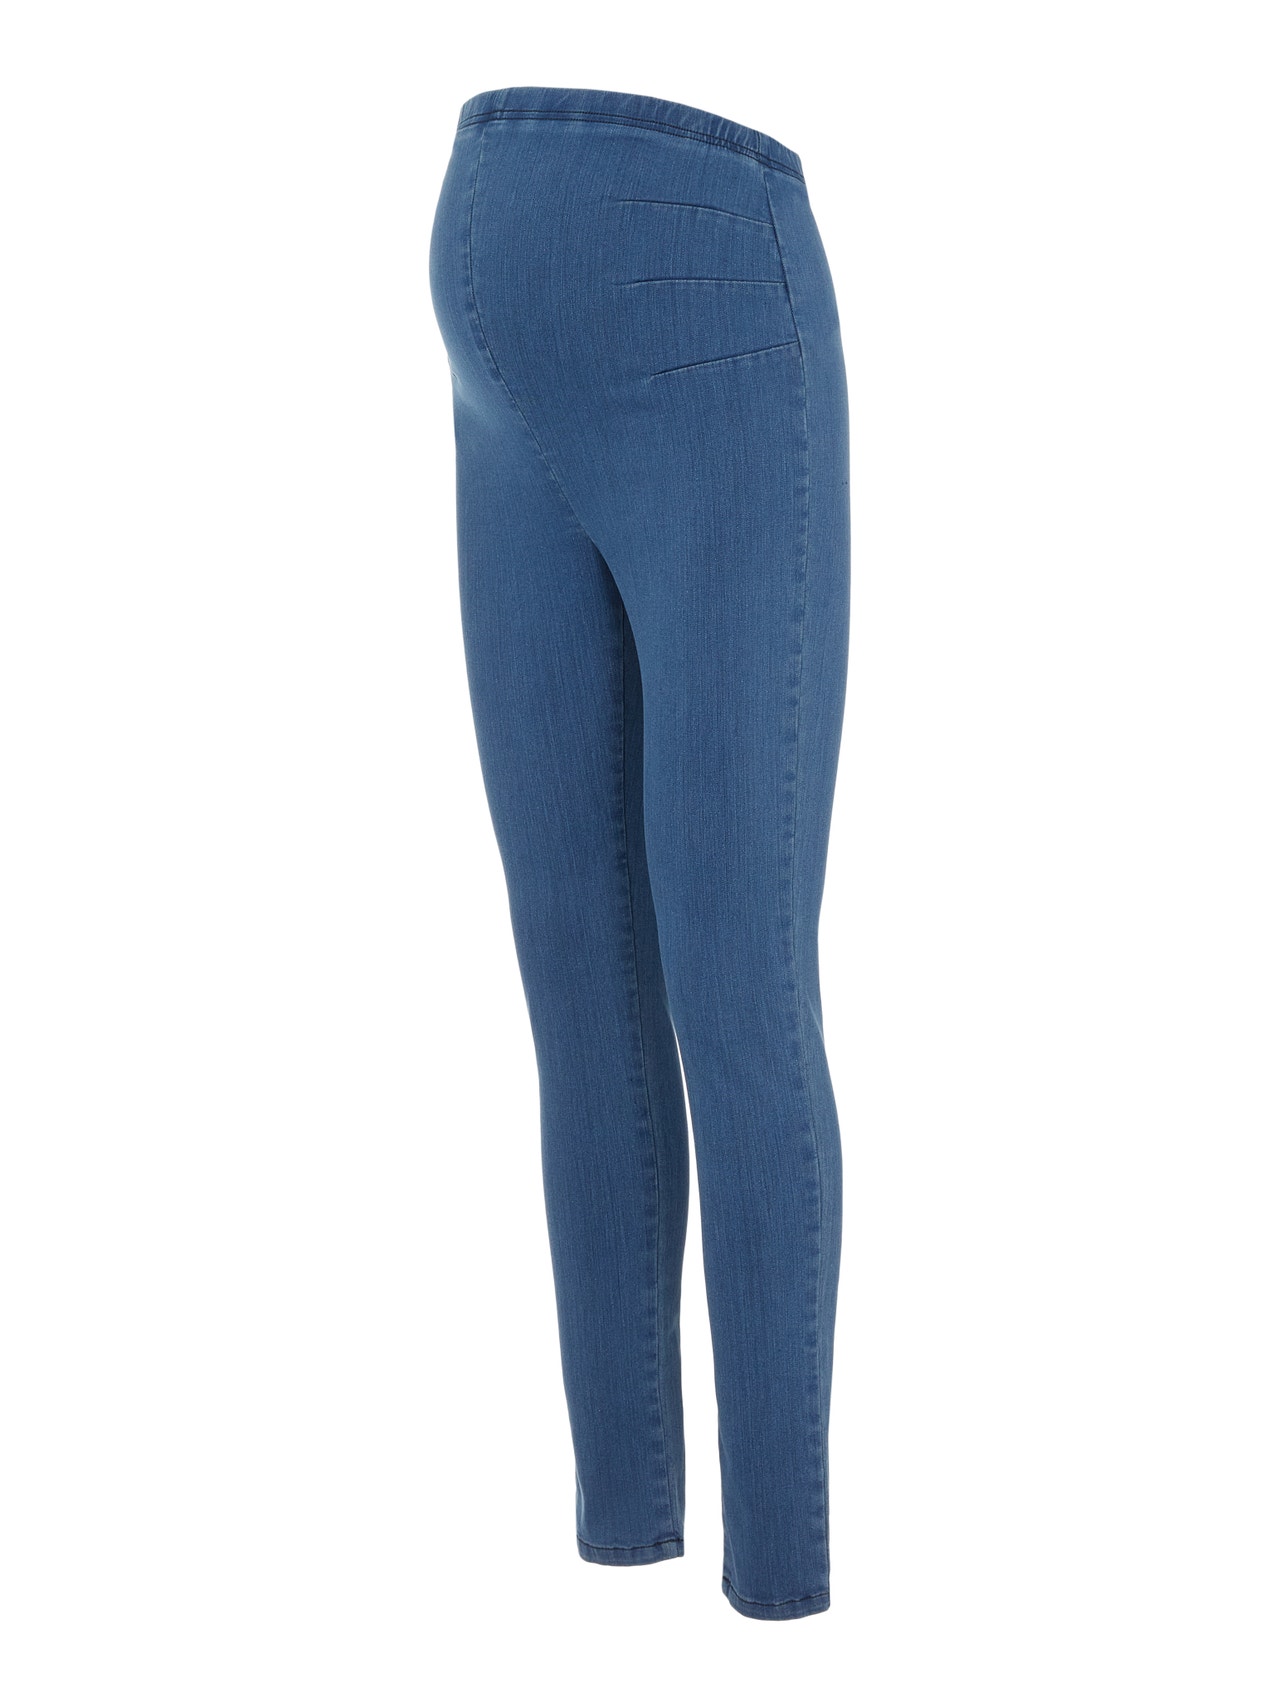 Calzedonia MATERNITY - Jeggings - blu jeans/dirty denim 